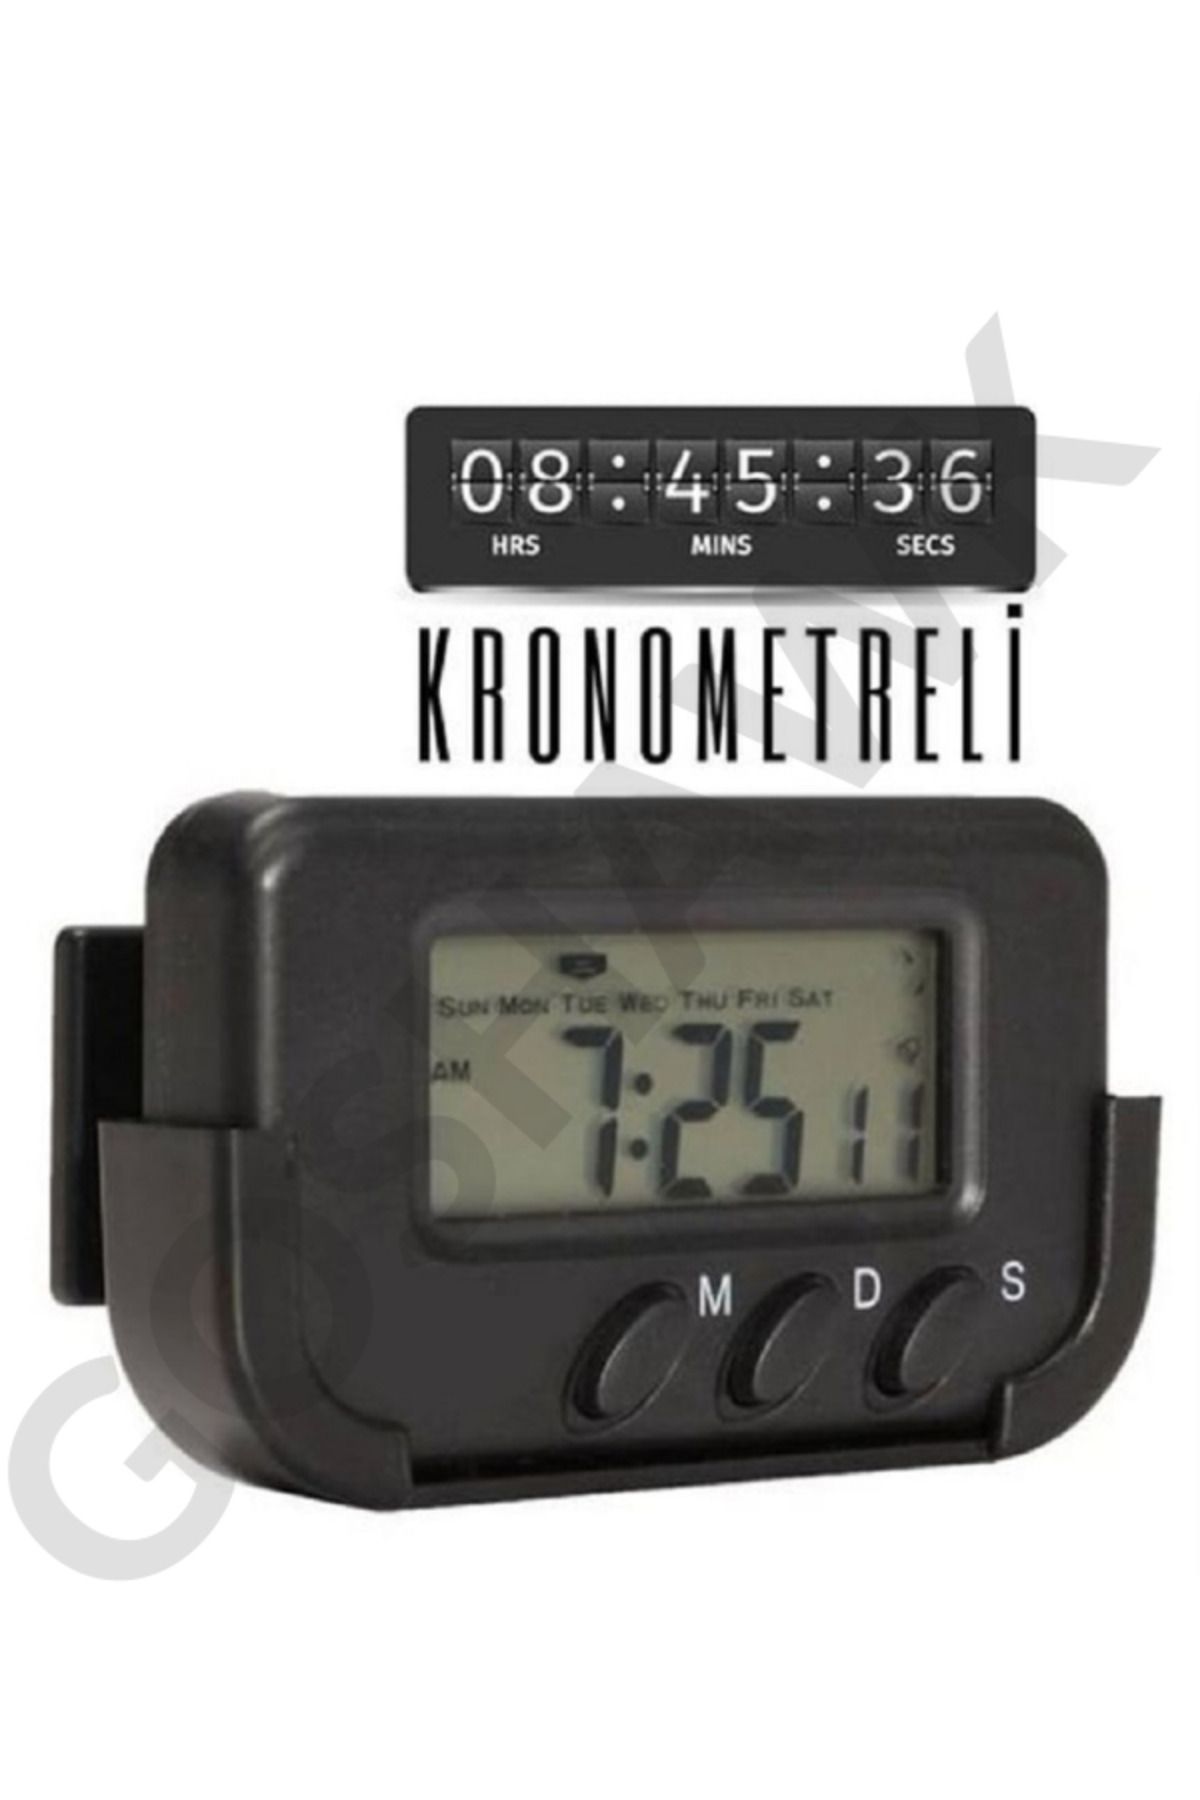 goshawk Pomodoro Öğrenci Saati - Kronometreli Ders Çalışma Saati - Dijital Masa Saati